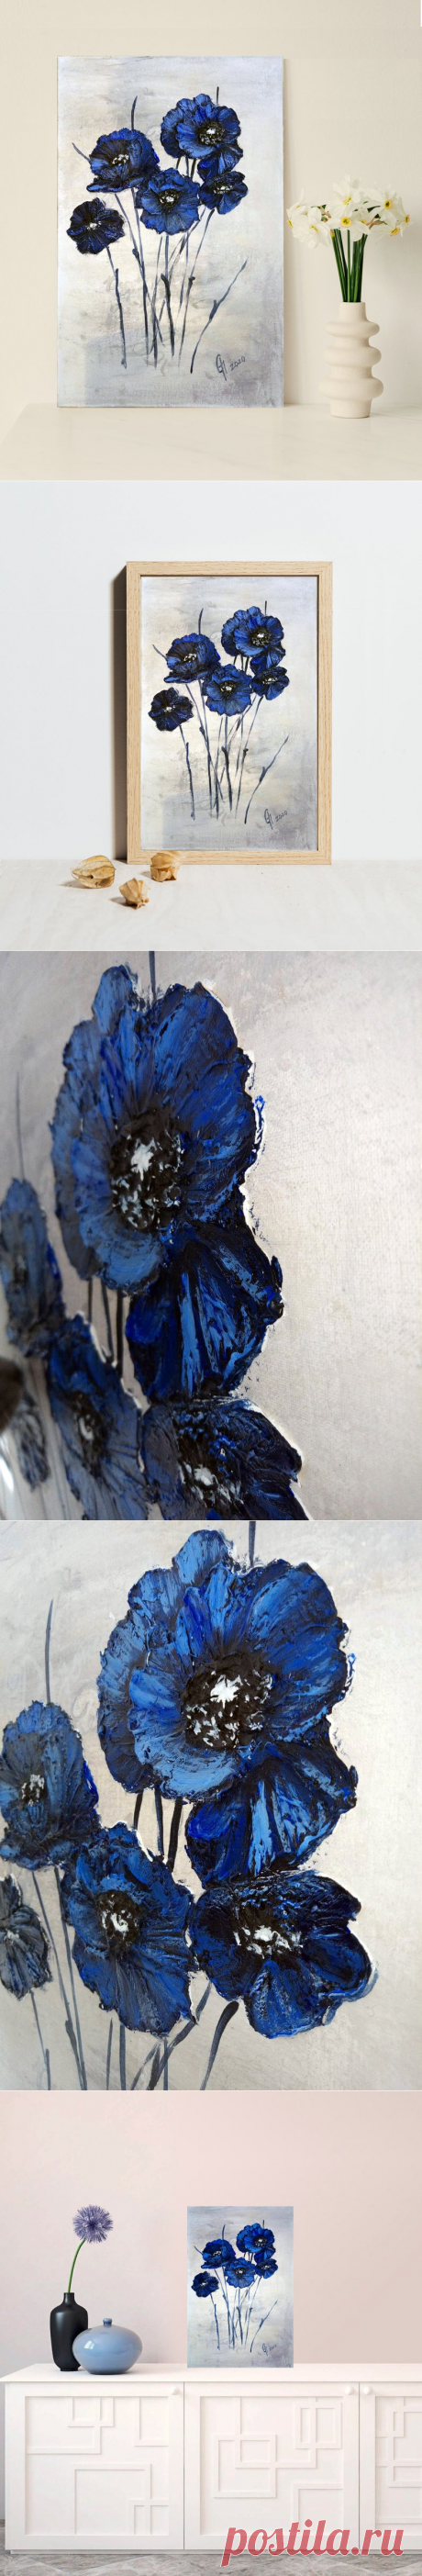 Blaue Mohnblumen Acryl-Malerei auf Leinwand Mohn Blumen | Etsy